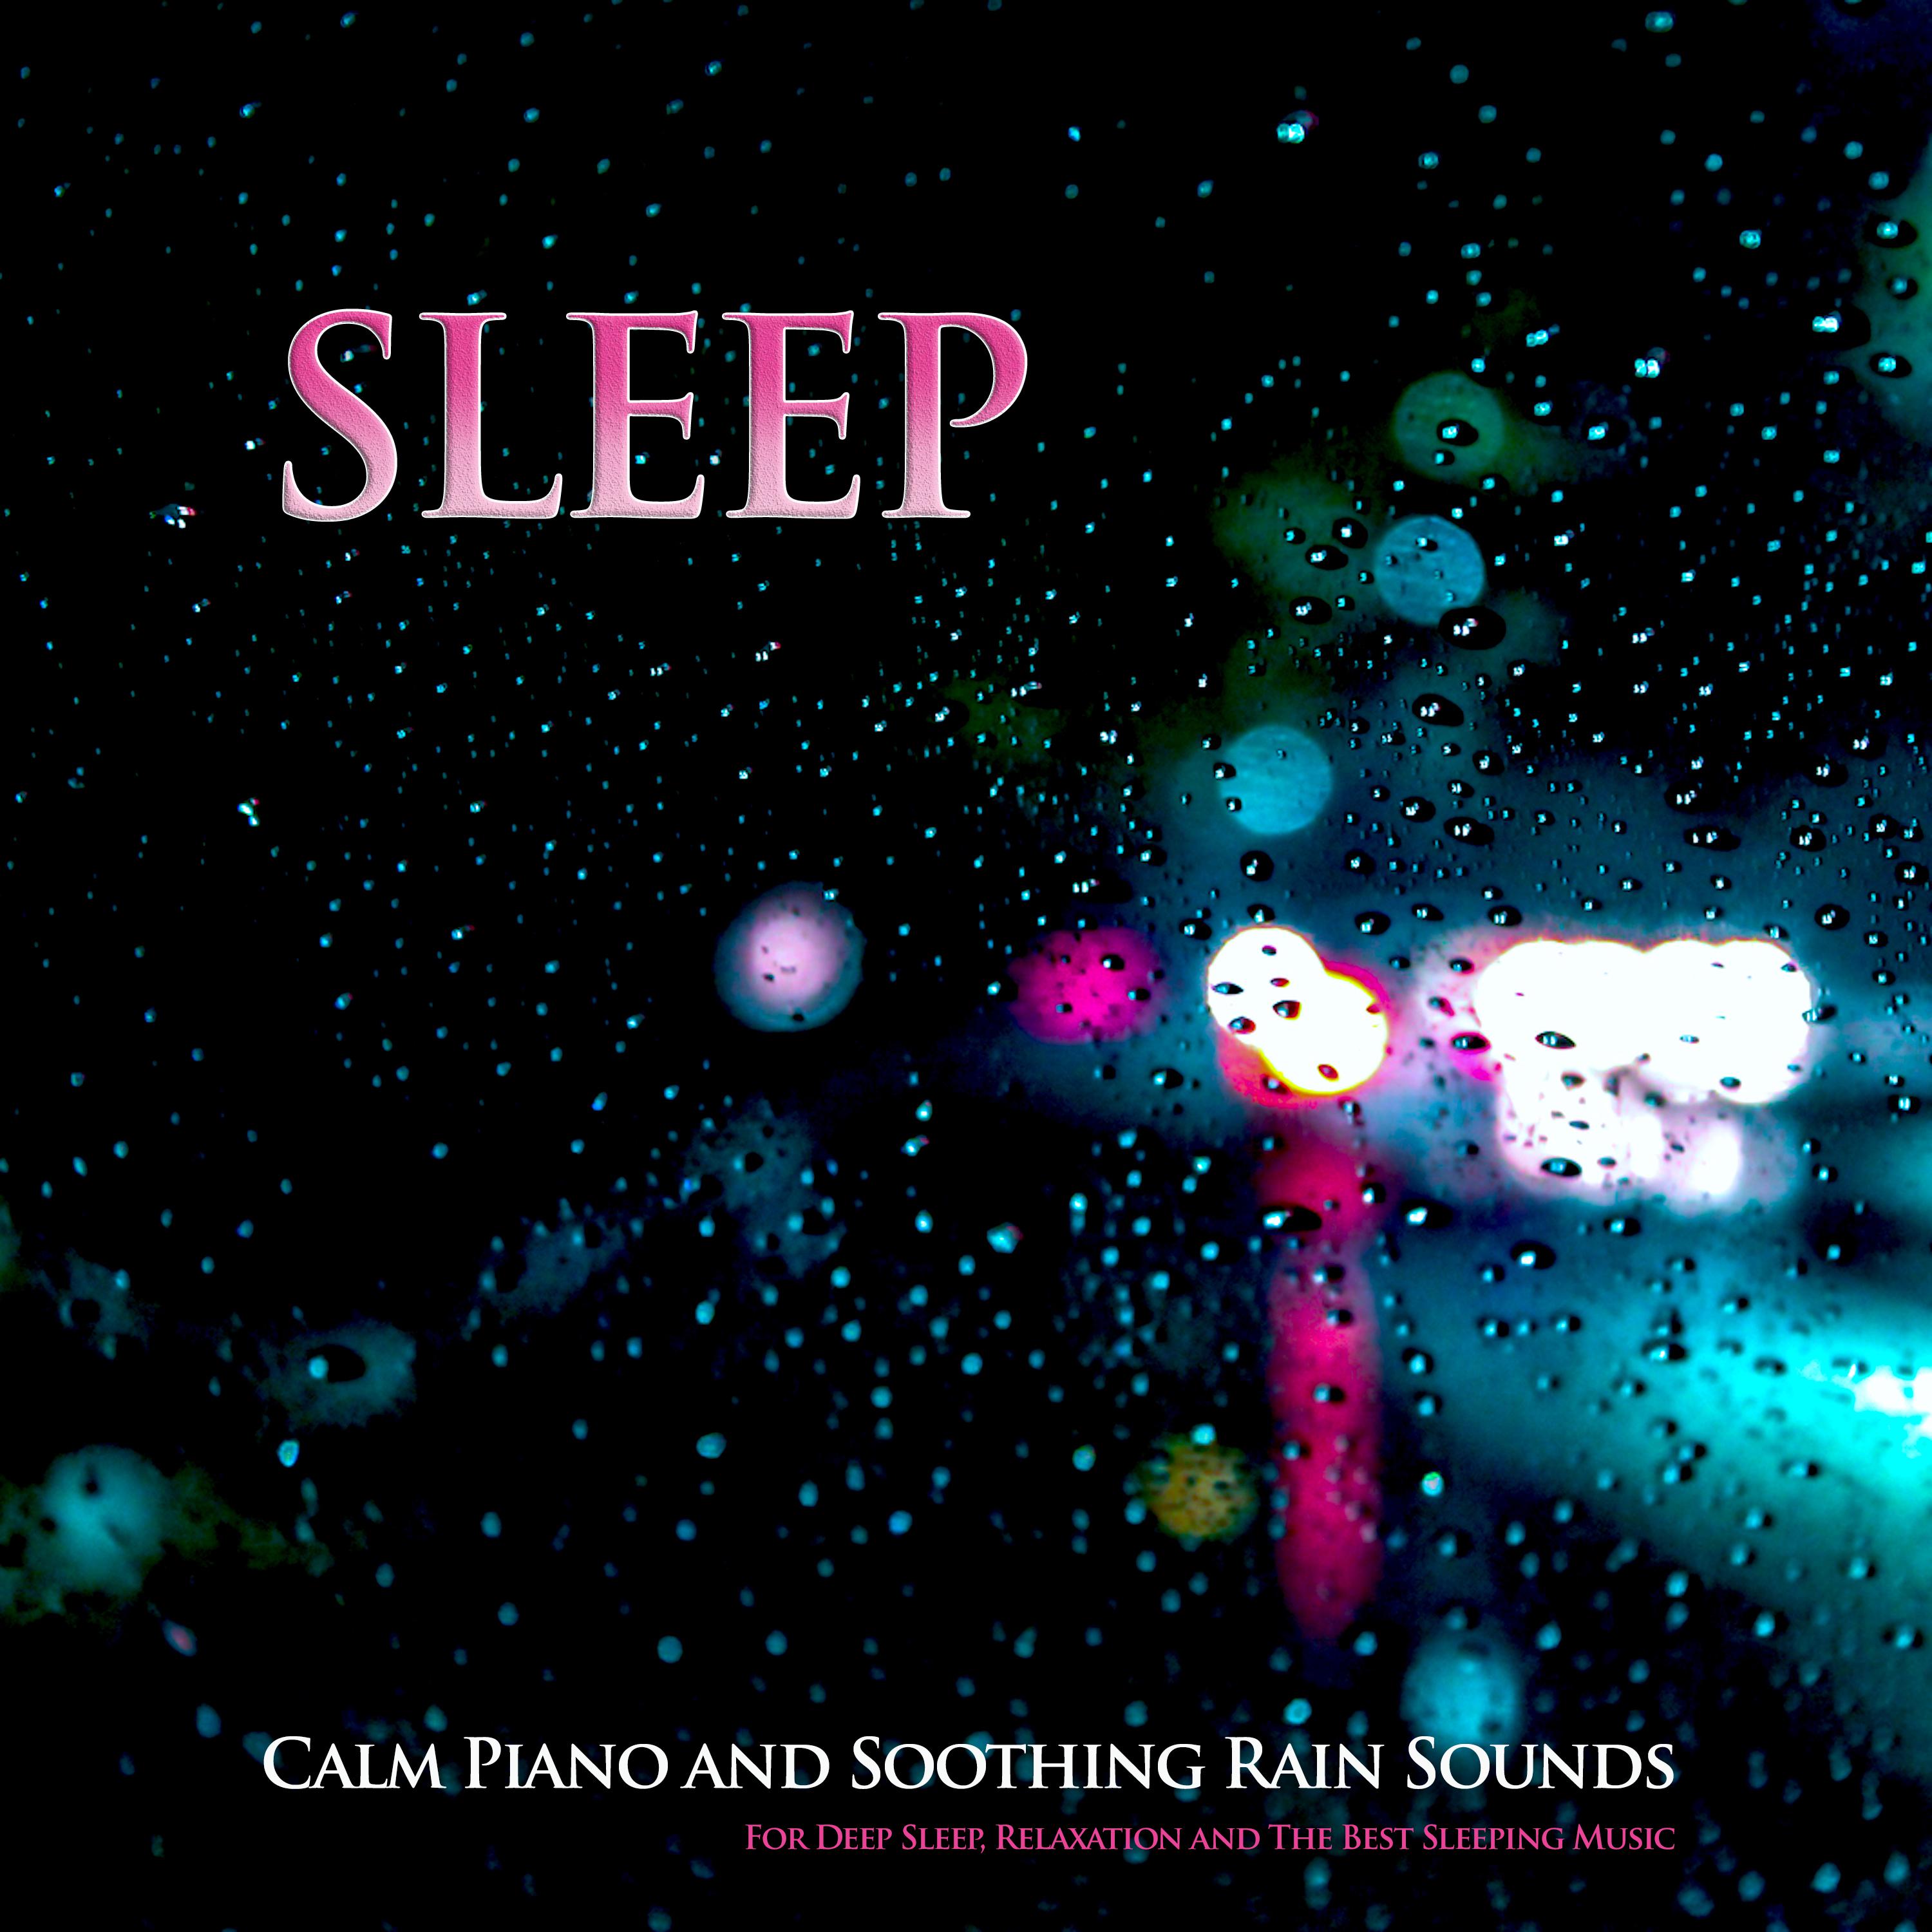 Sleeping Music and Sounds of Rain